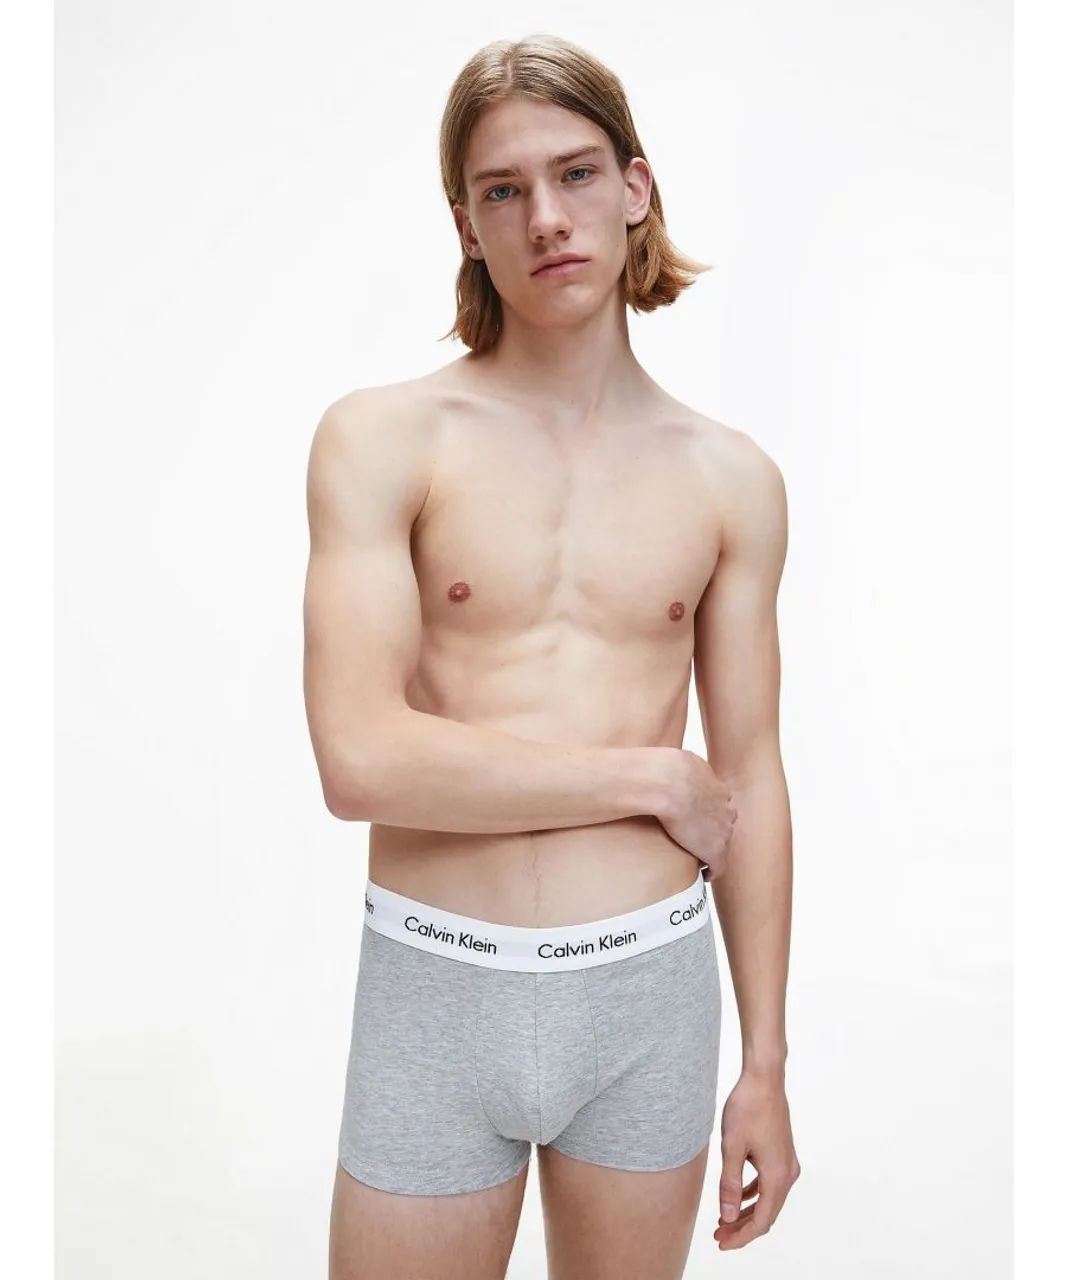 Calvin Klein Mens 3 Pack Trunks - Mid Rise - Cotton Stretch, Black/White/Grey - Multicolour